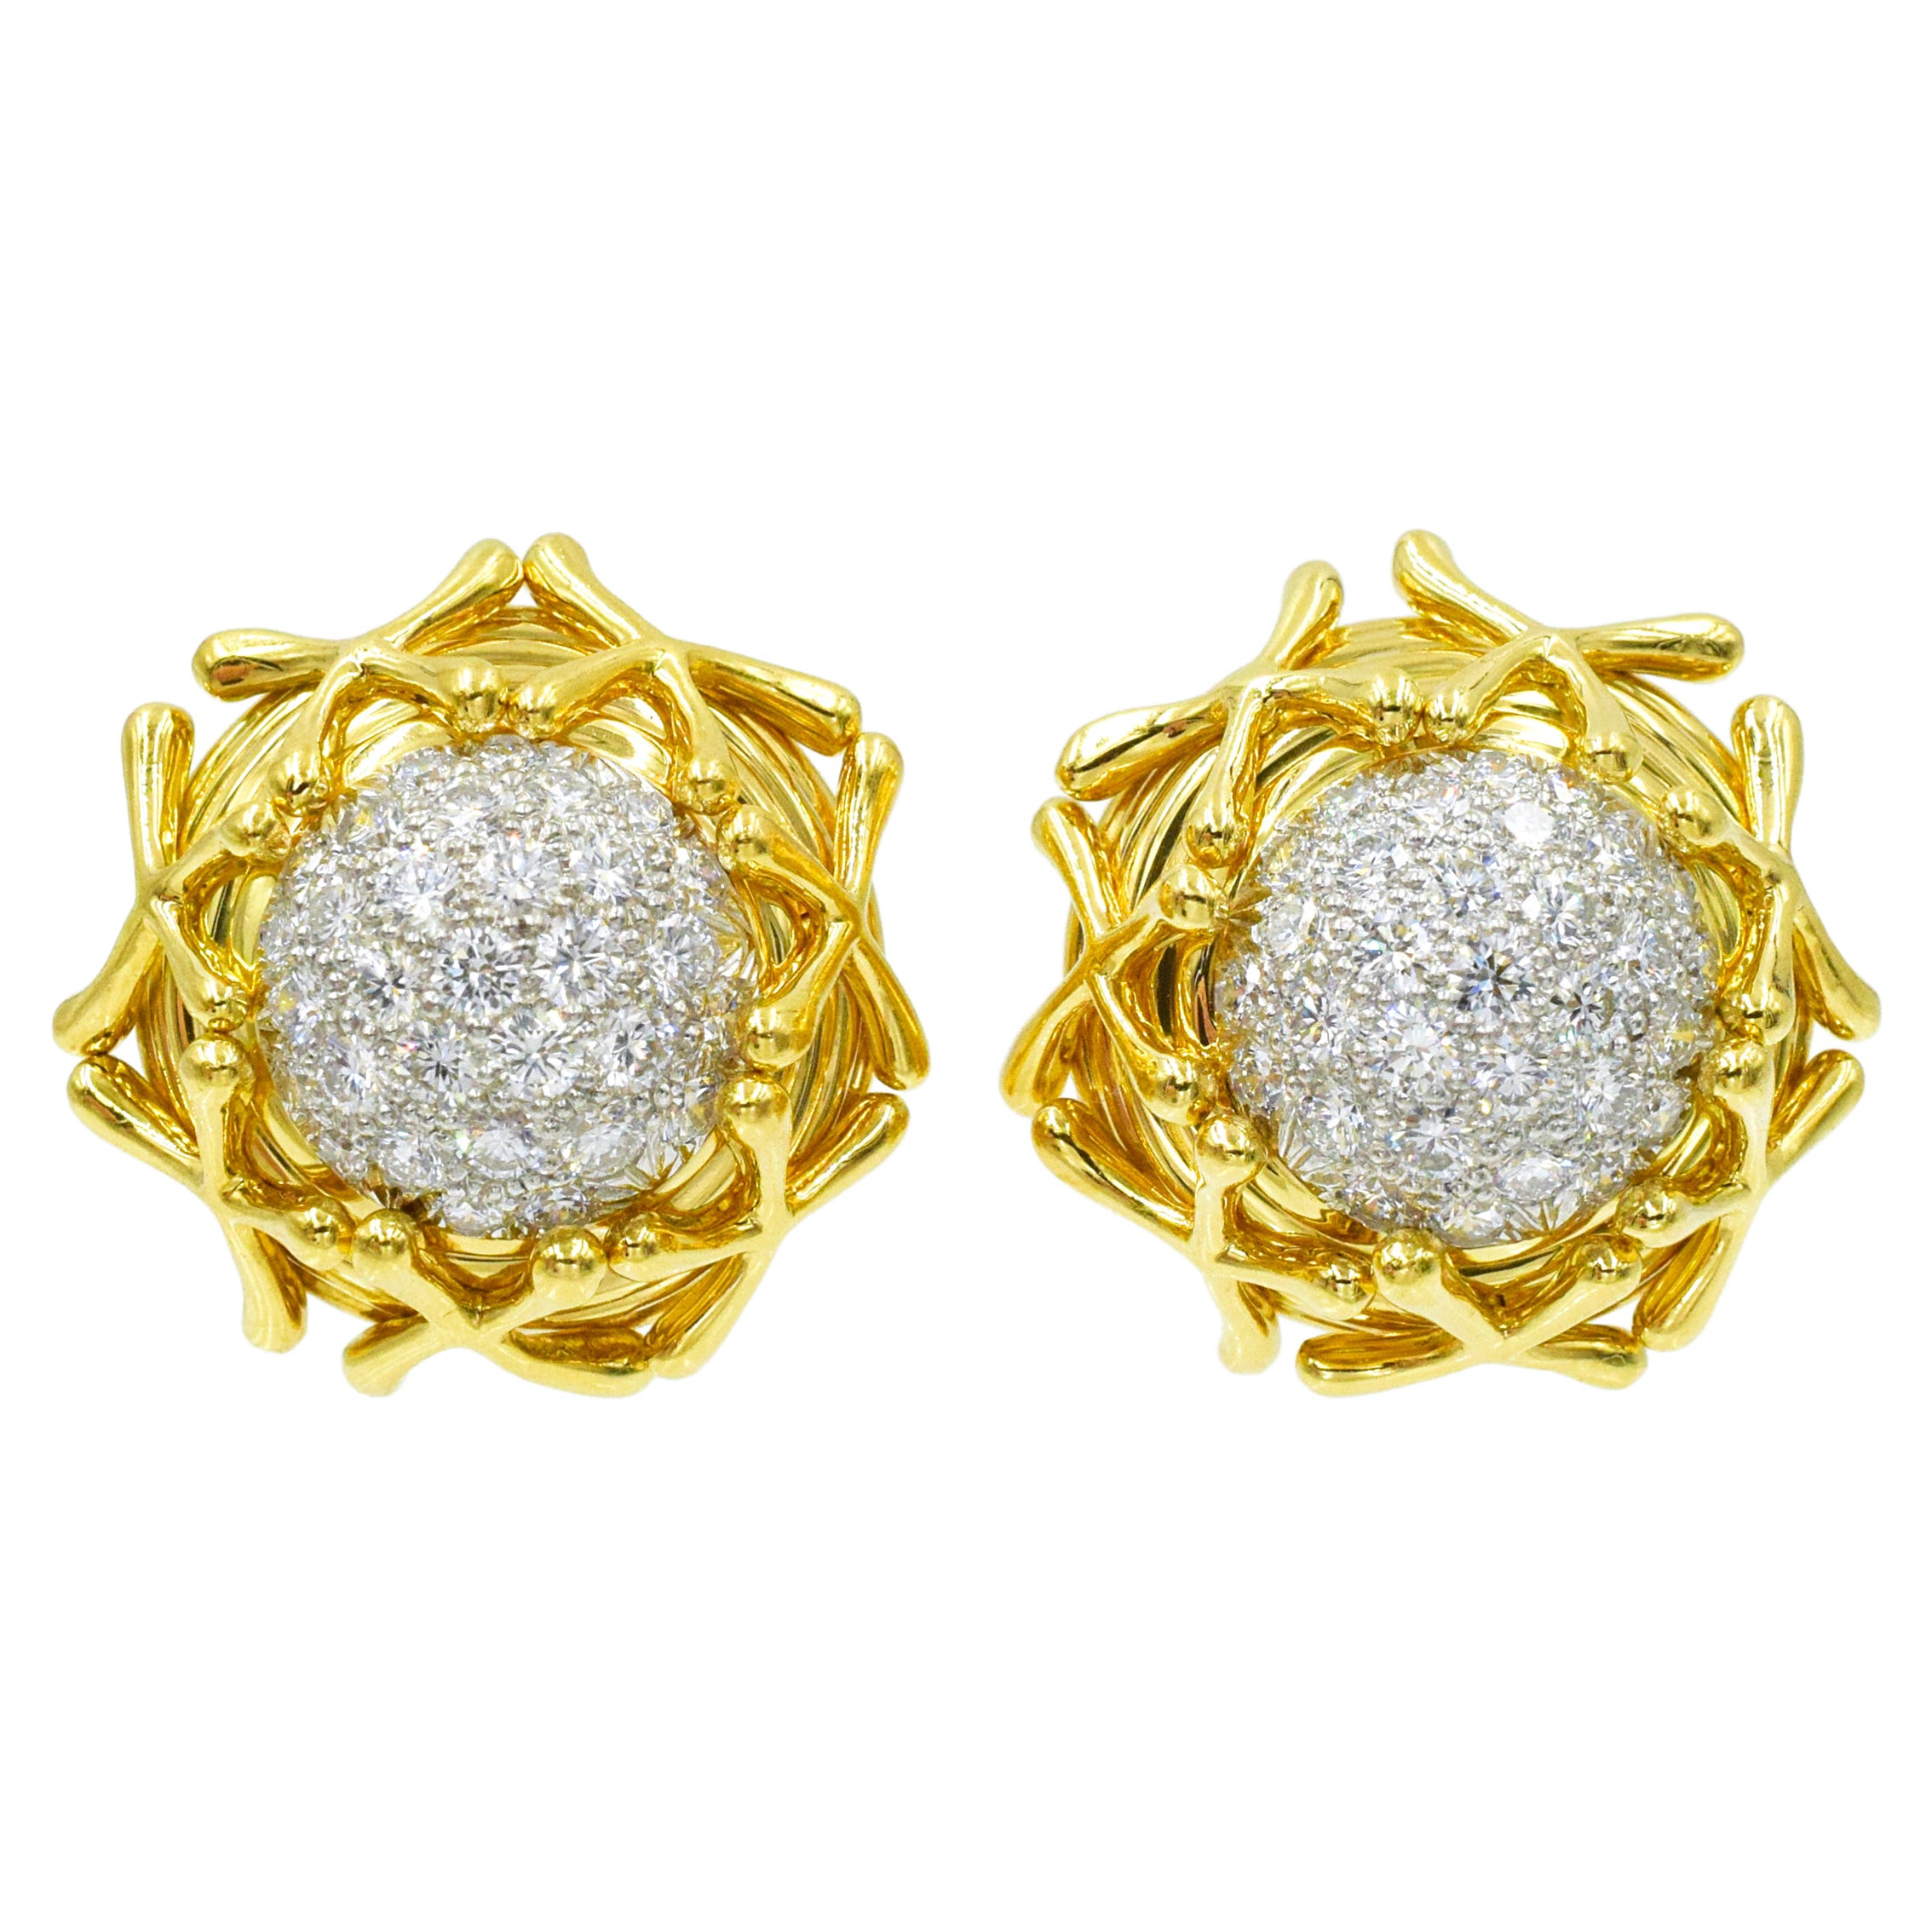 Tiffany & Co. Jean Shlumberger Diamond Clip on Earrings in 18k Yellow Gold